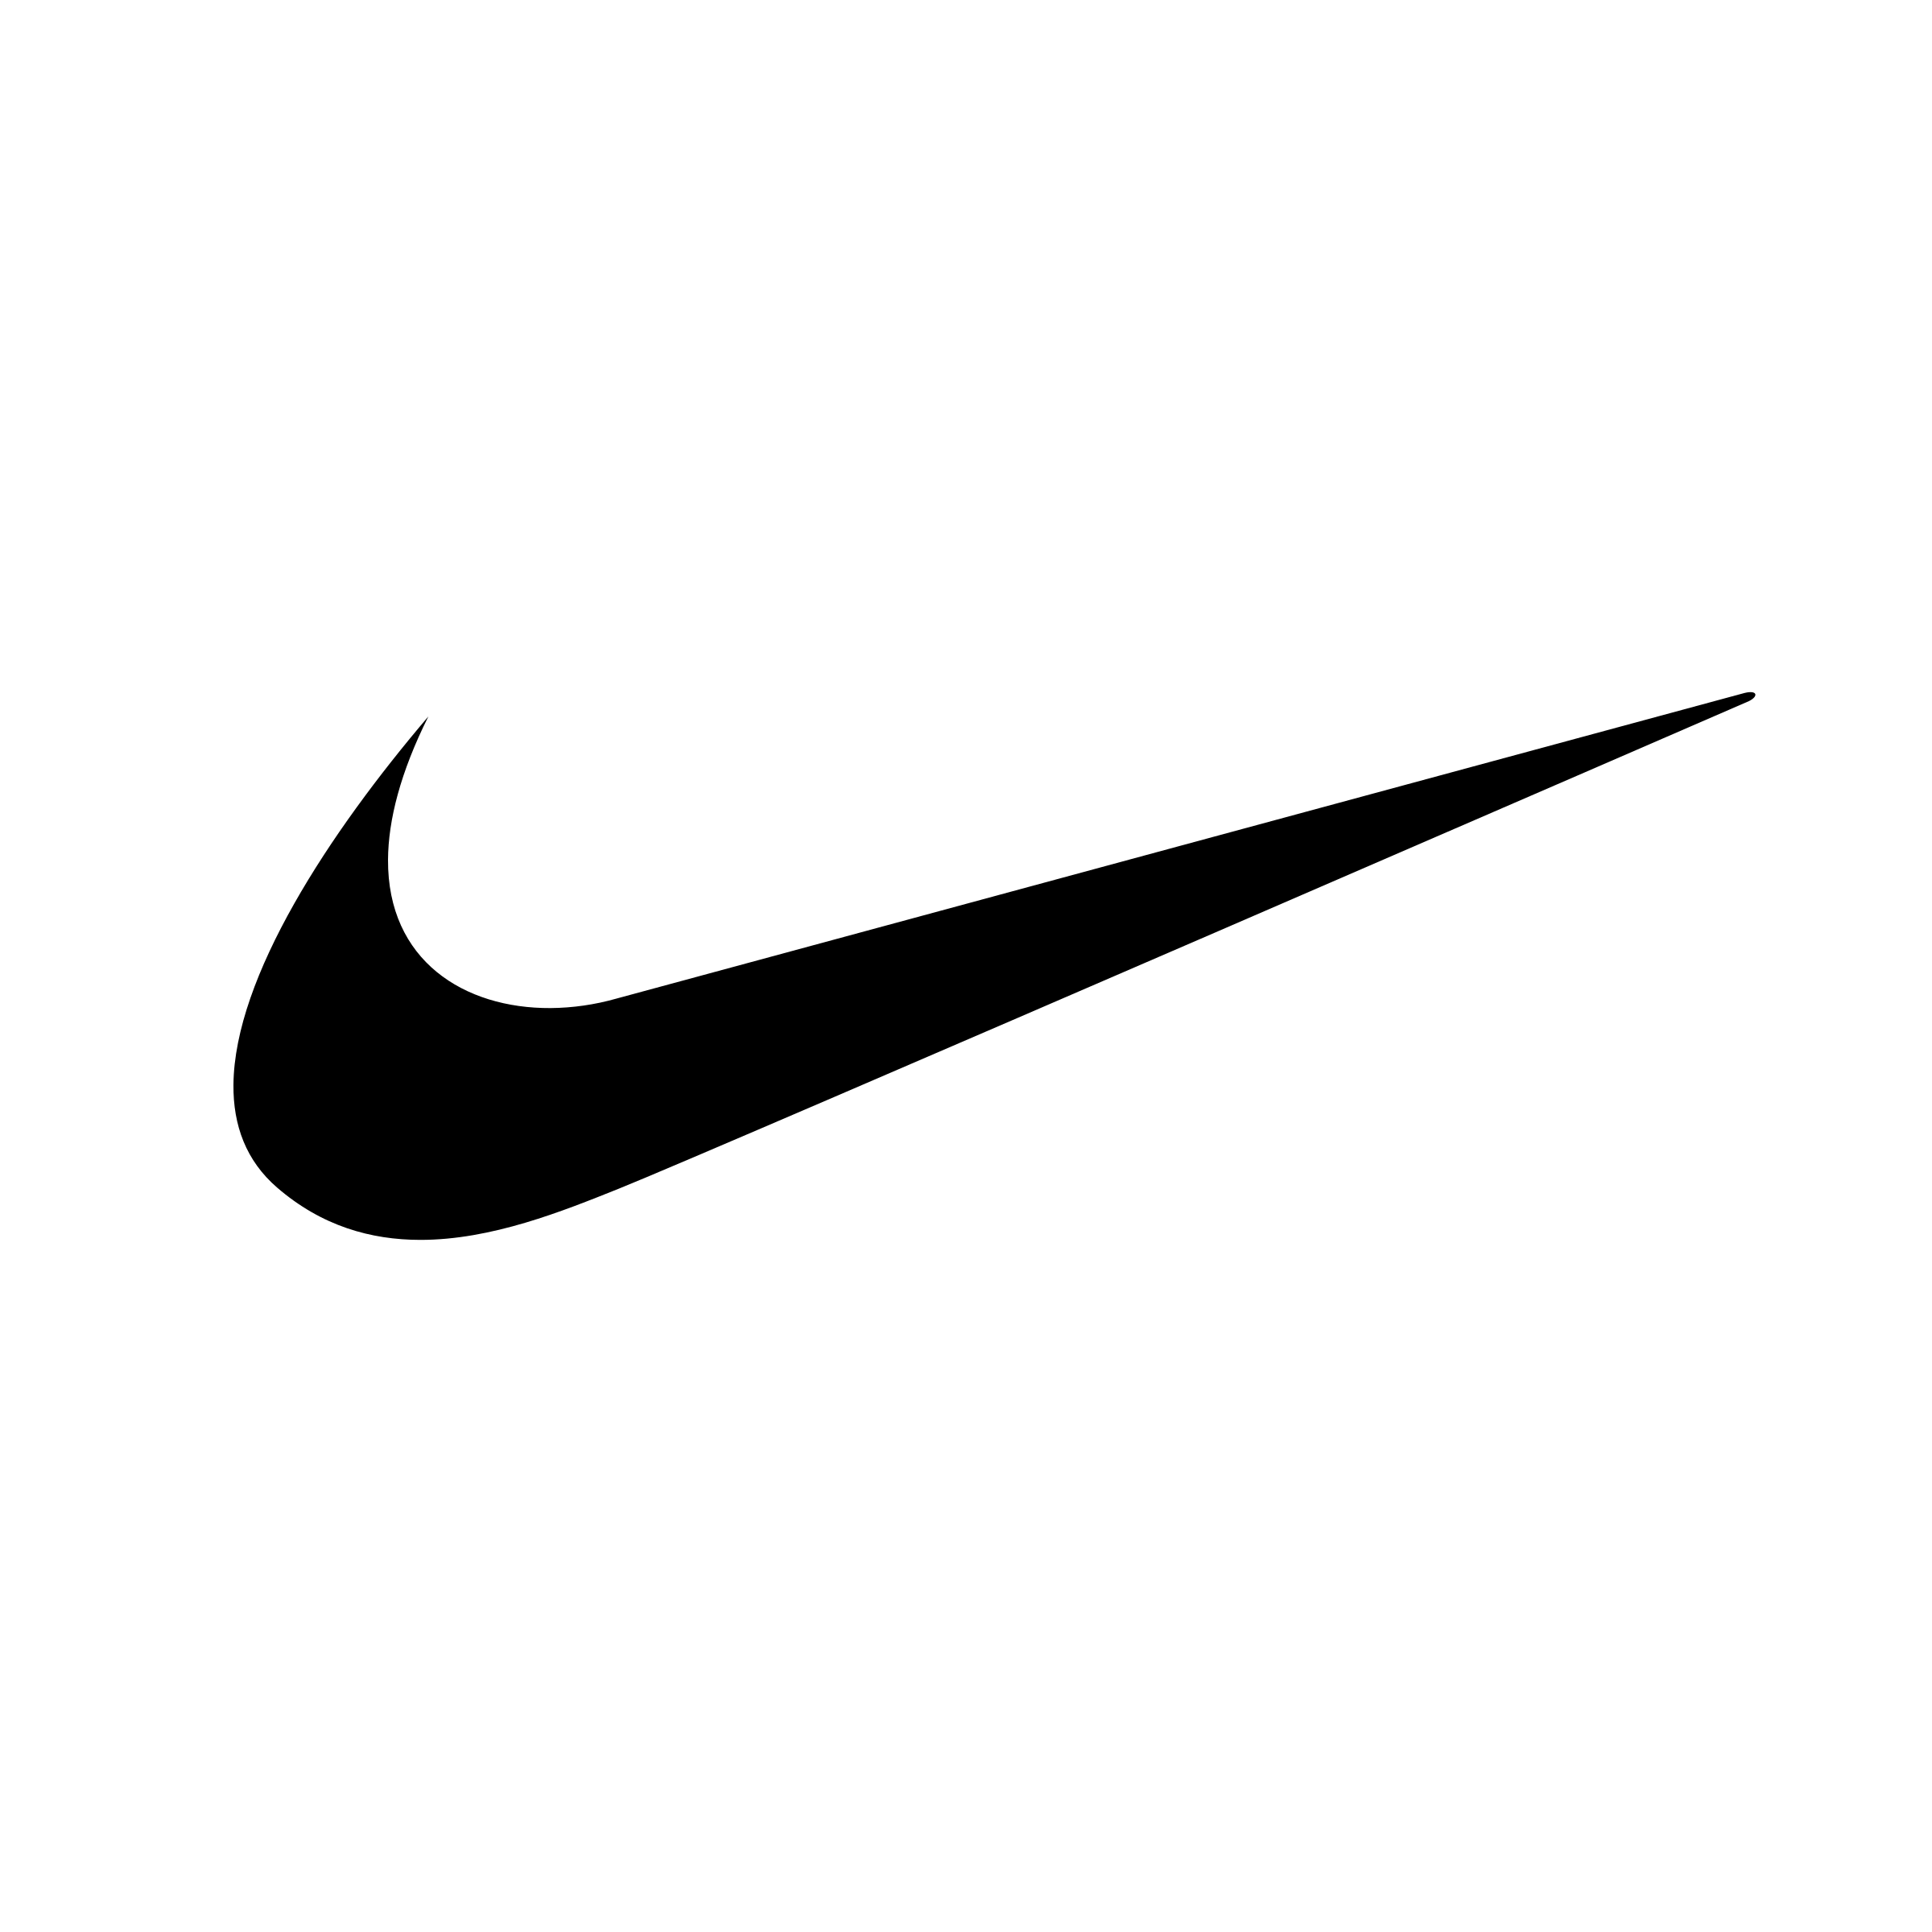 nike-4-logo-black-and-white